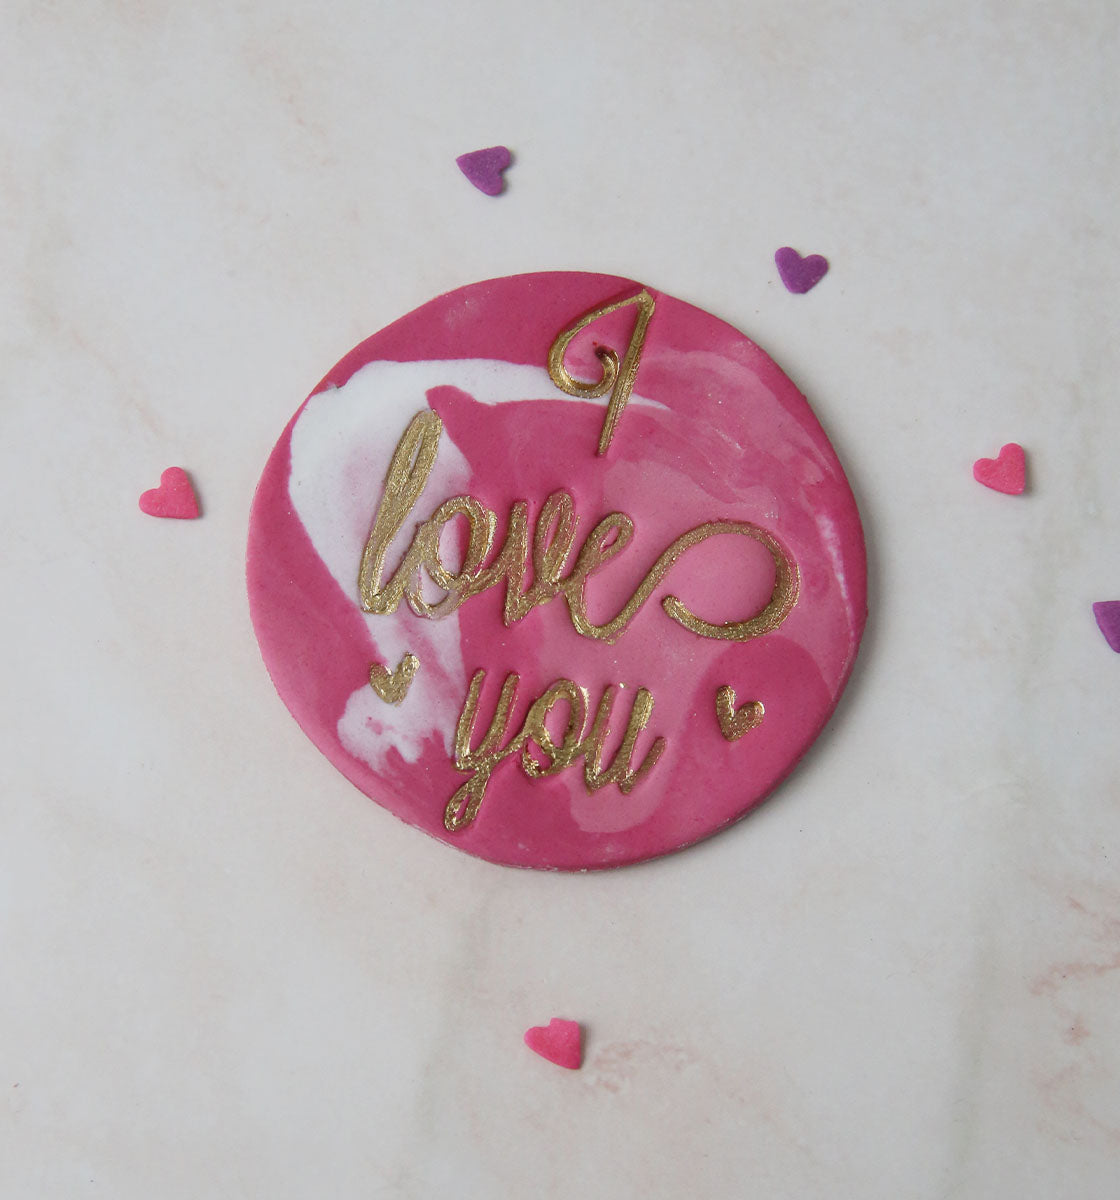 I Love You - Cake Stamp